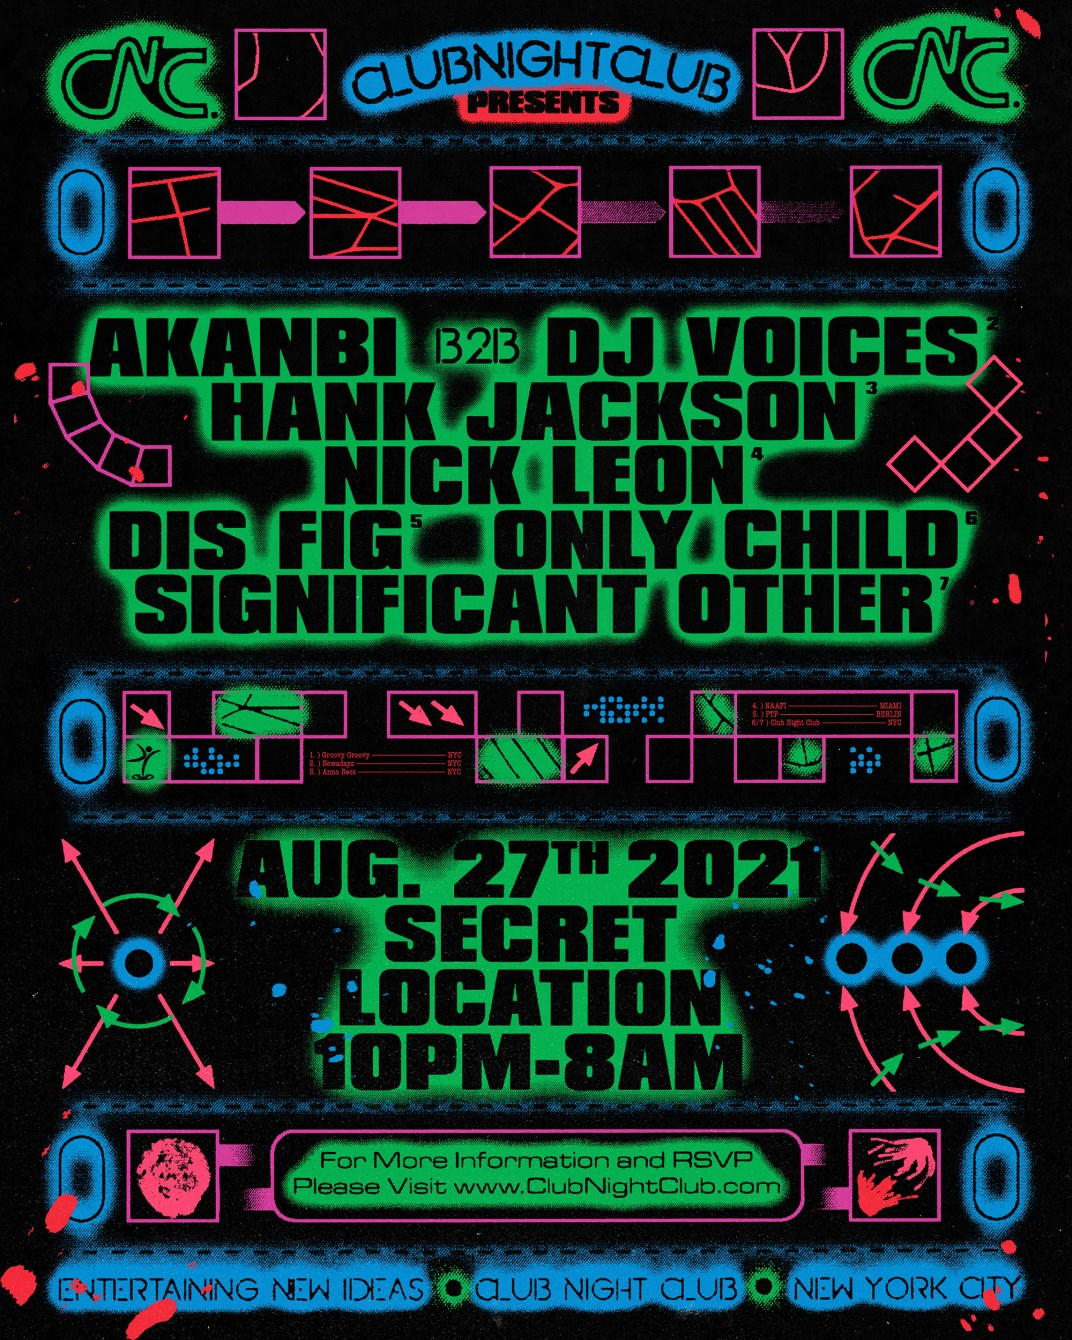 Club Night Club: Nick León, Dis Fig, DJ Voices b2b Akanbi, Hank Jackson - Flyer front